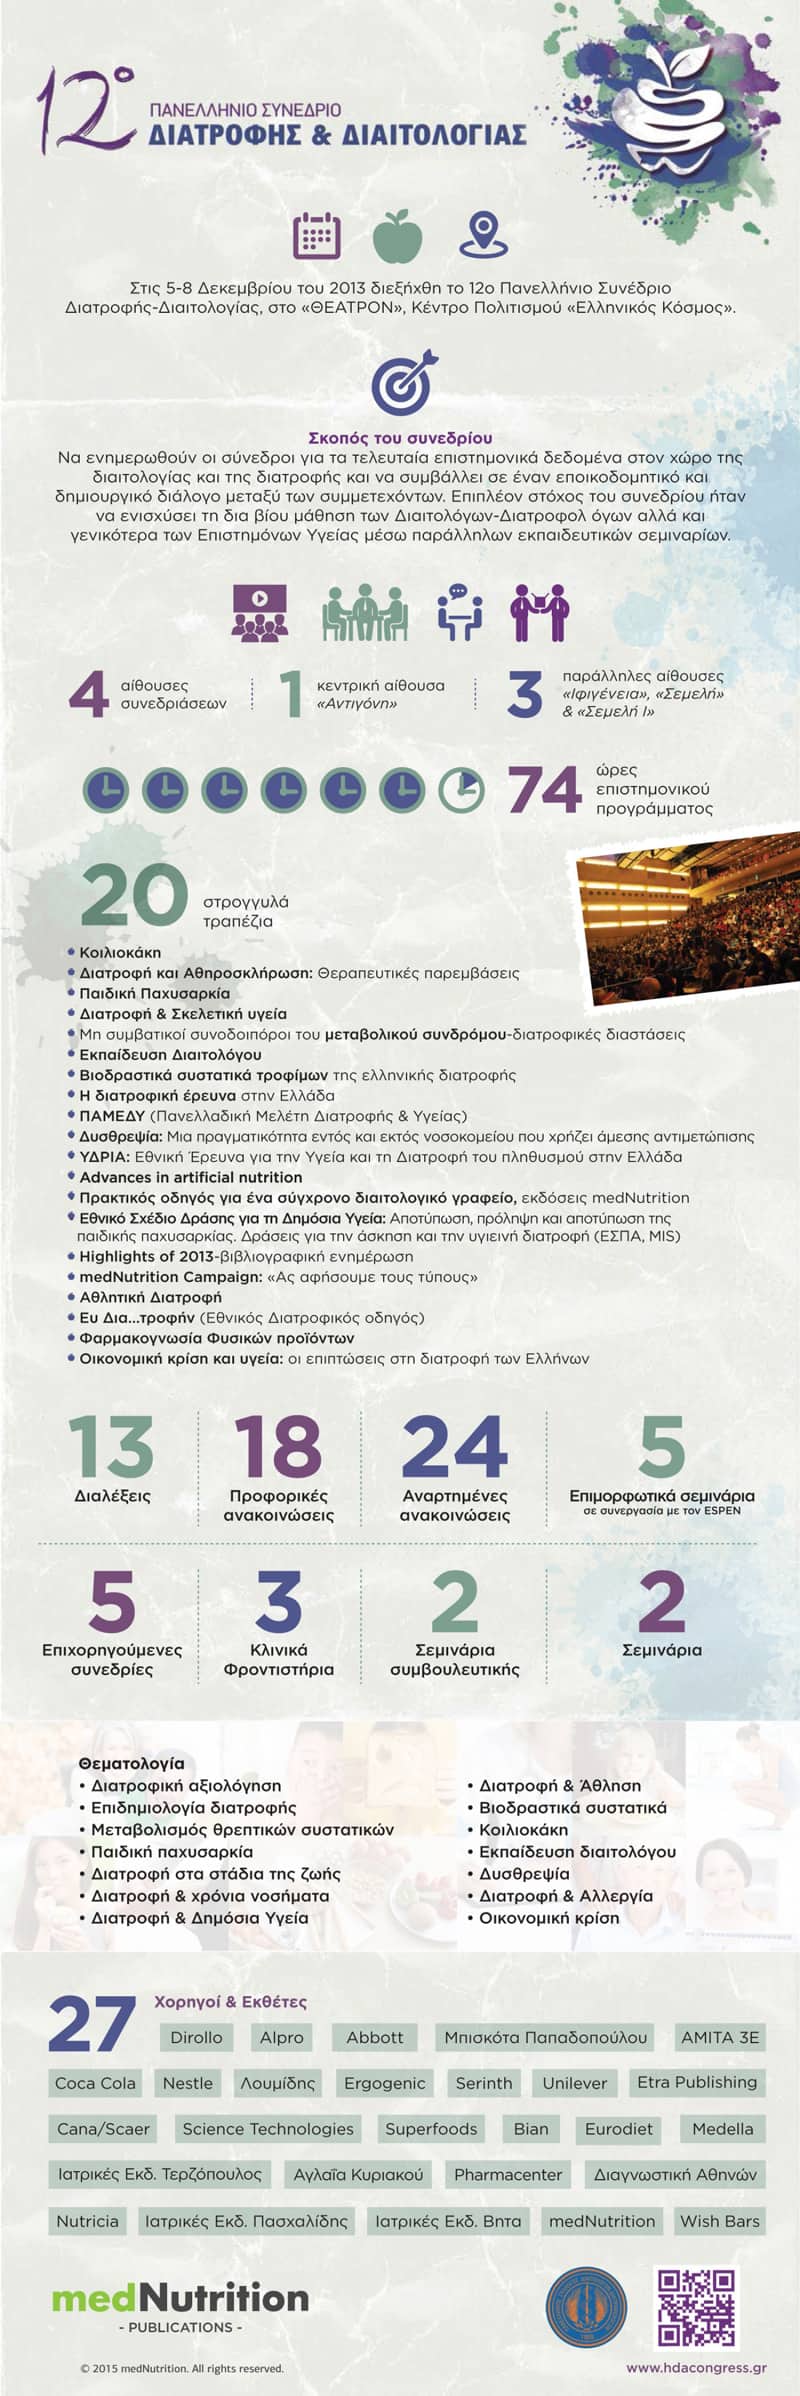 hda congress infographic